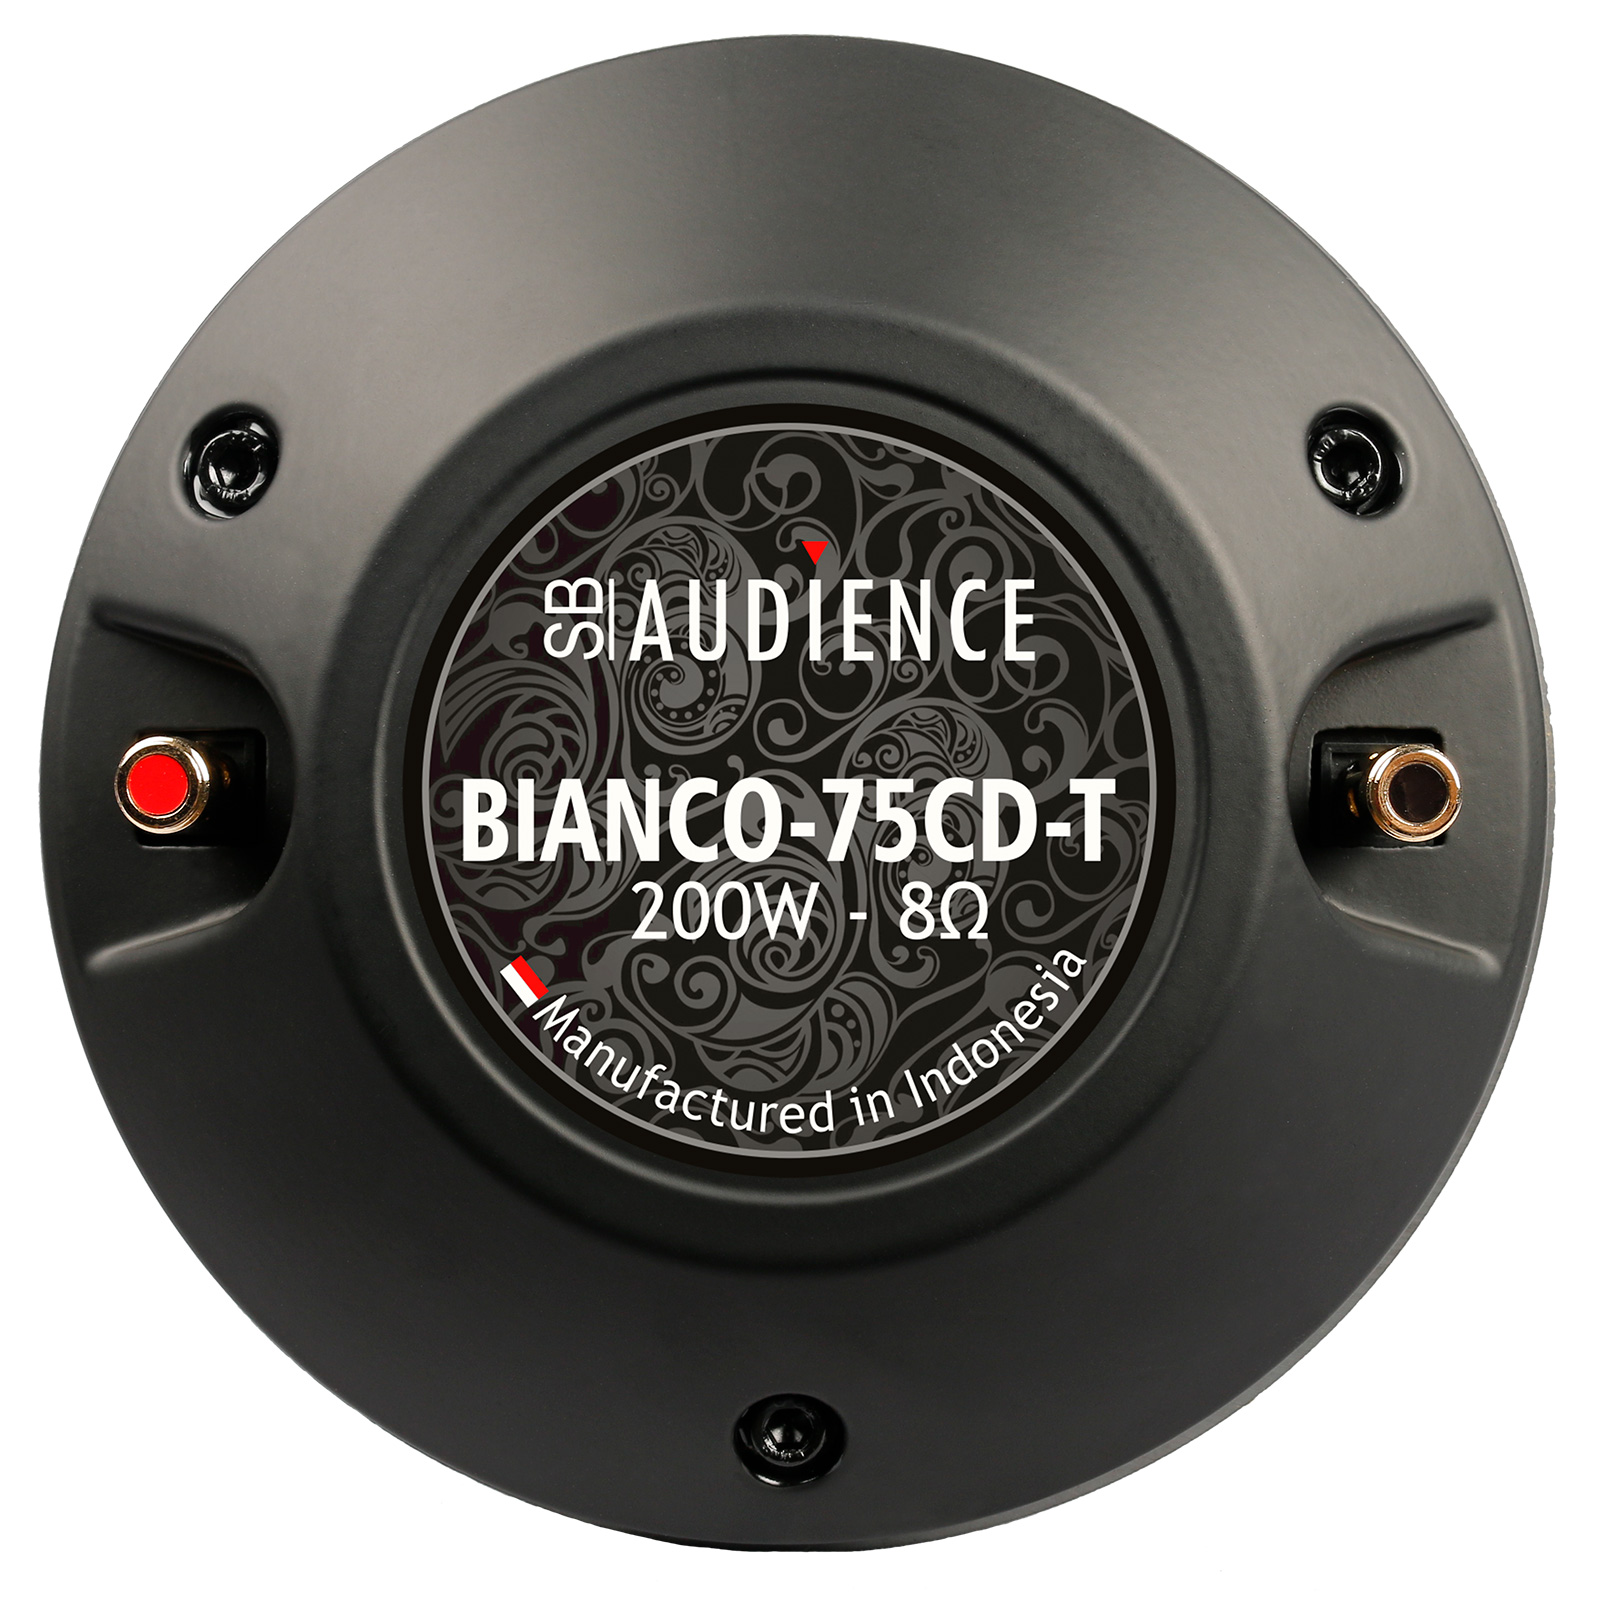 SB Audience BIANCO-75CD-T画像